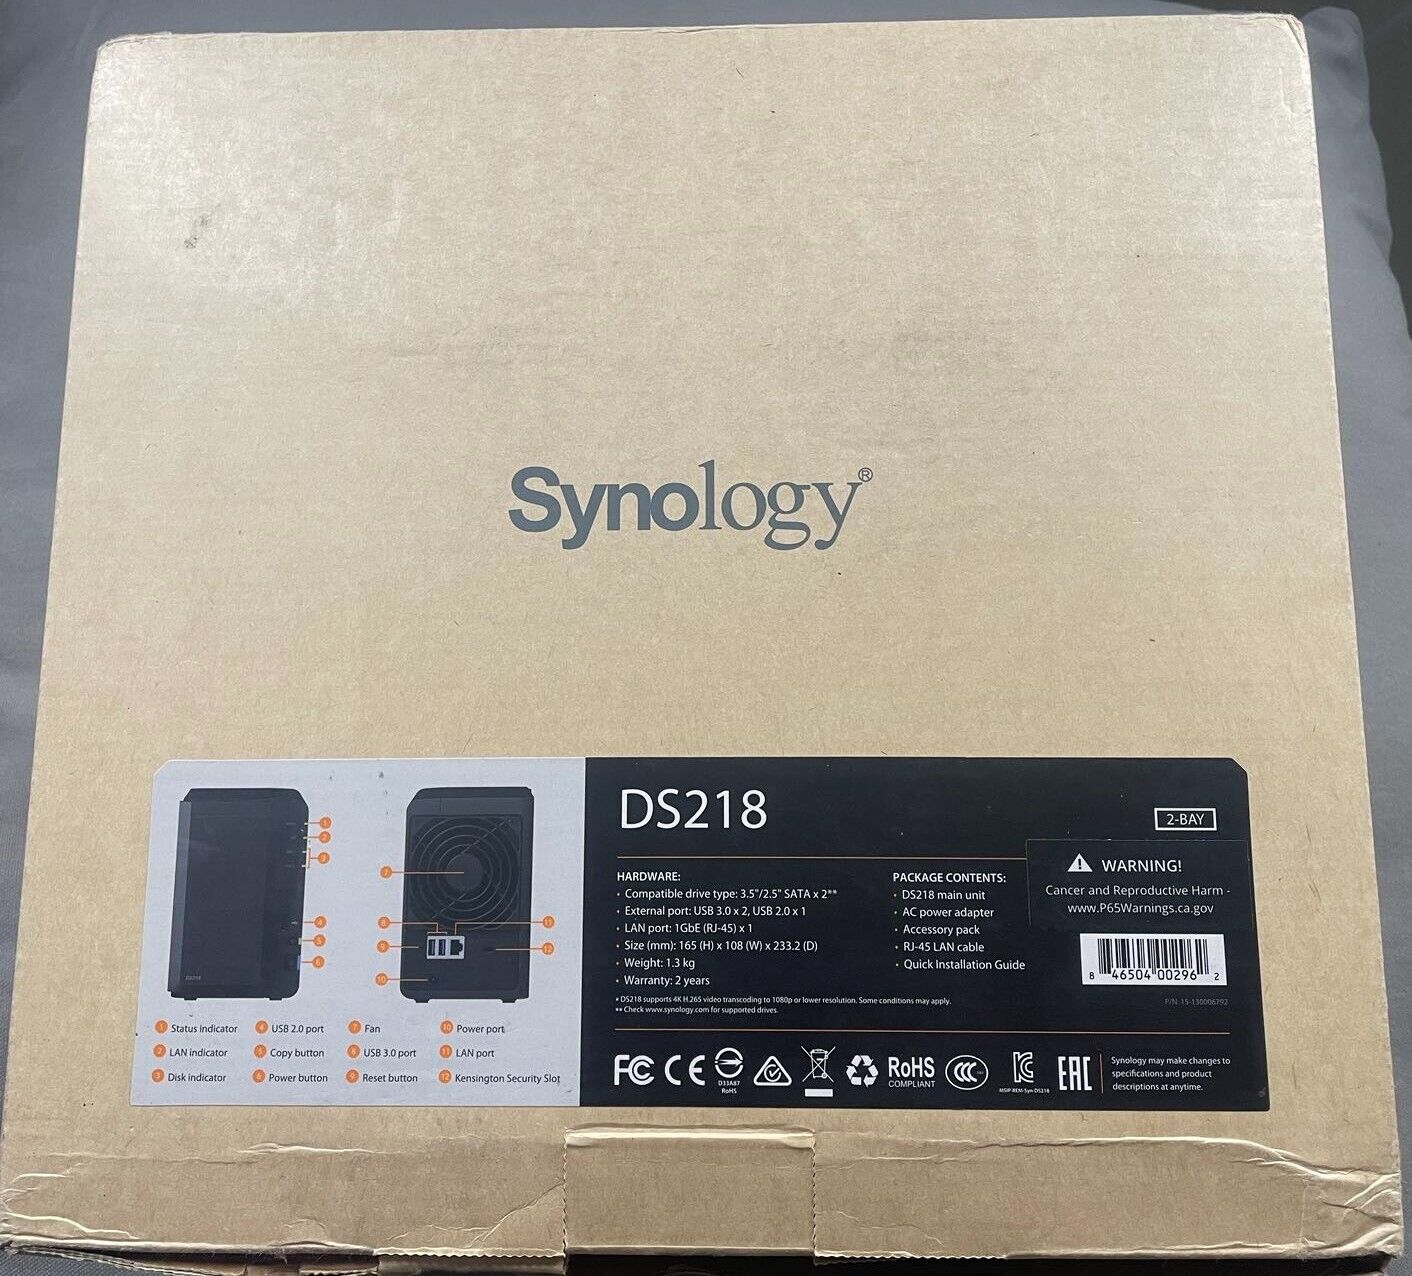 Synology DiskStation DS218 2-bay NAS - 20TB raw capacity, 64-bit quad-core